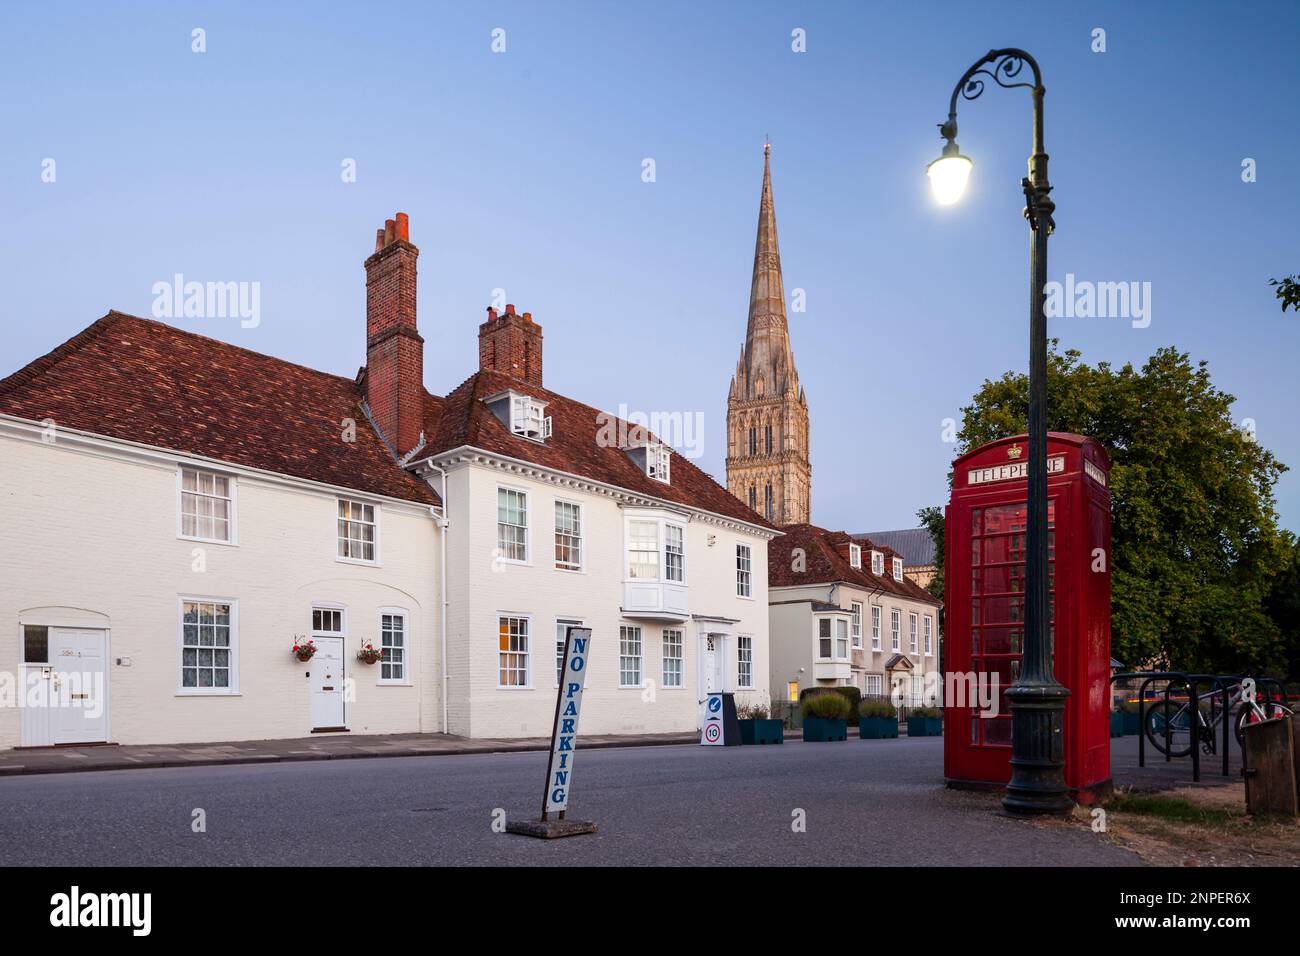 Evening on Choristers Square in Salisbury. Stock Photo